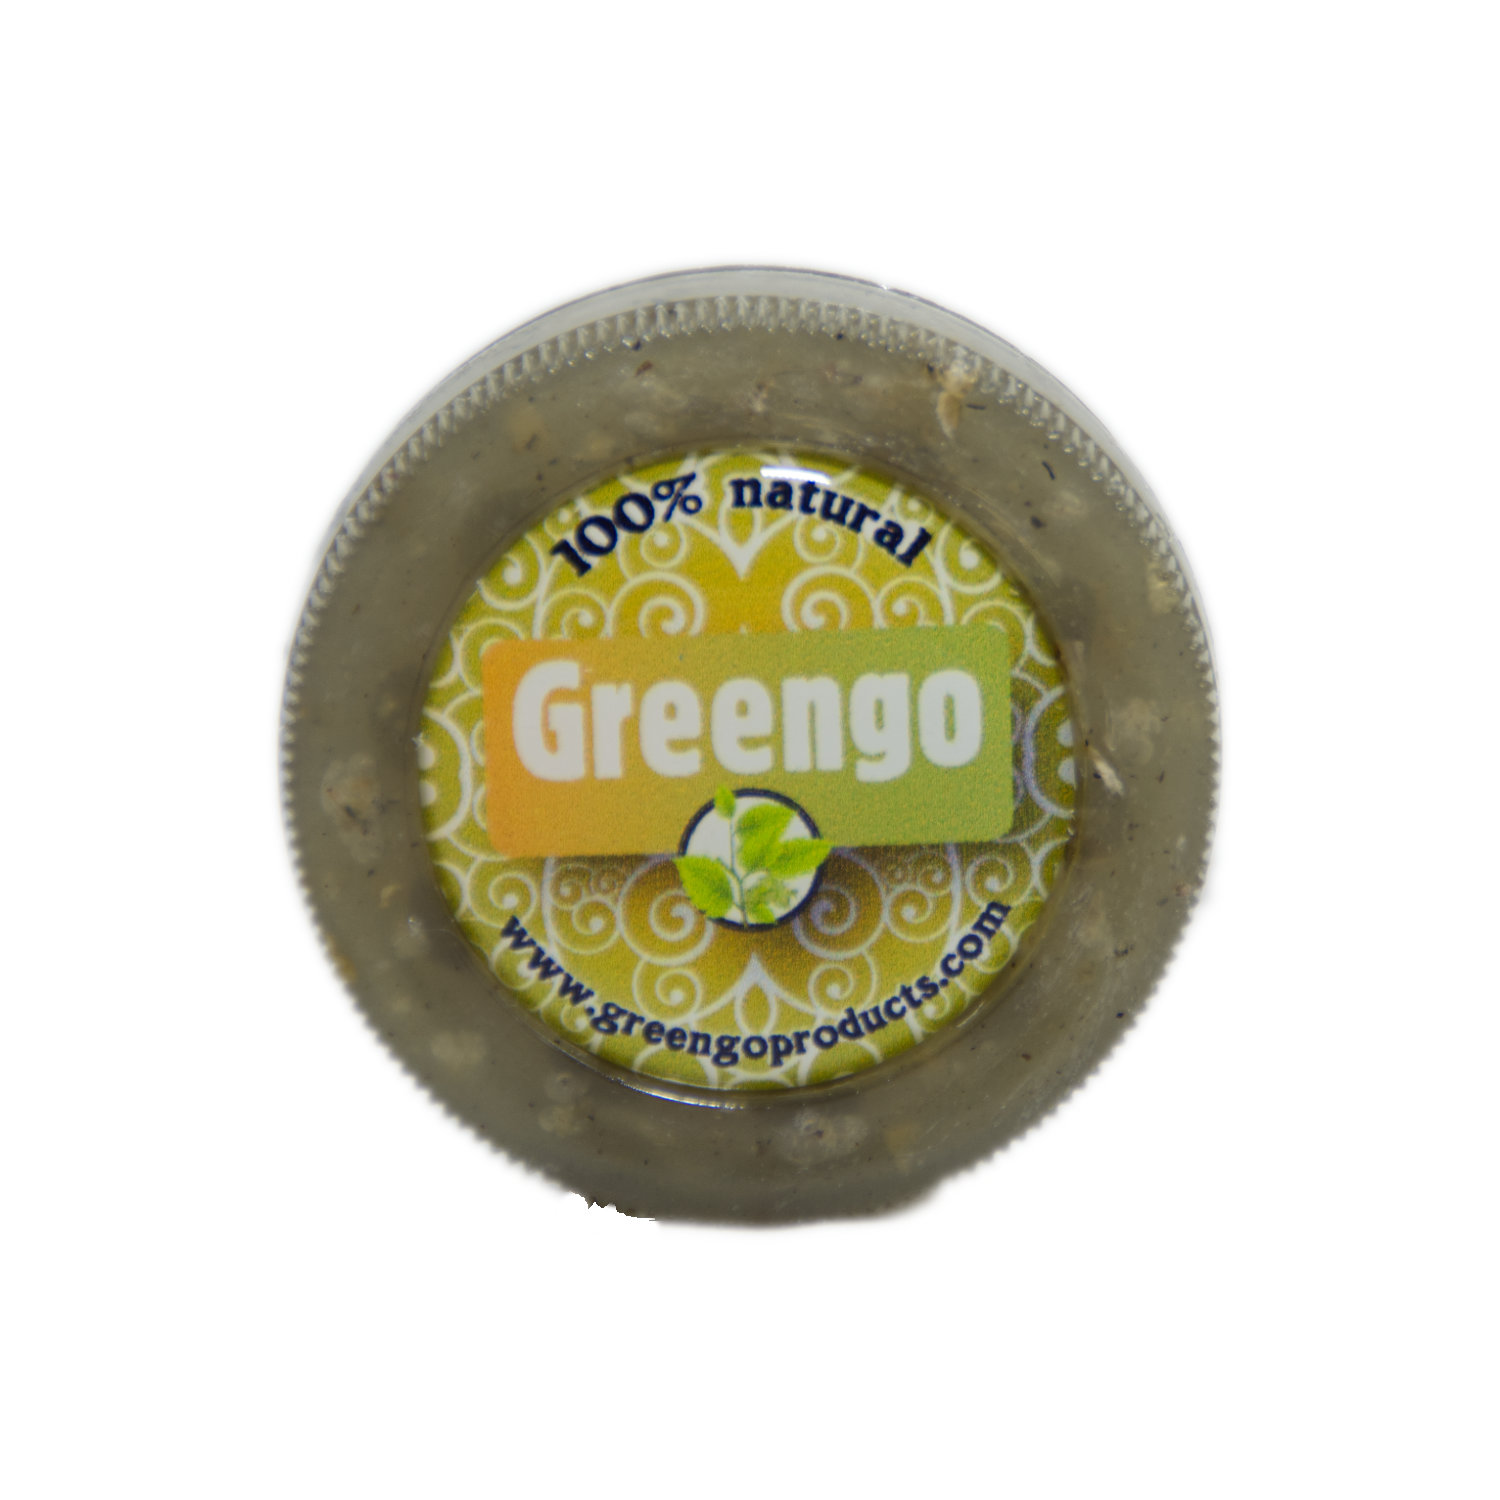 Grinder “Greengo”